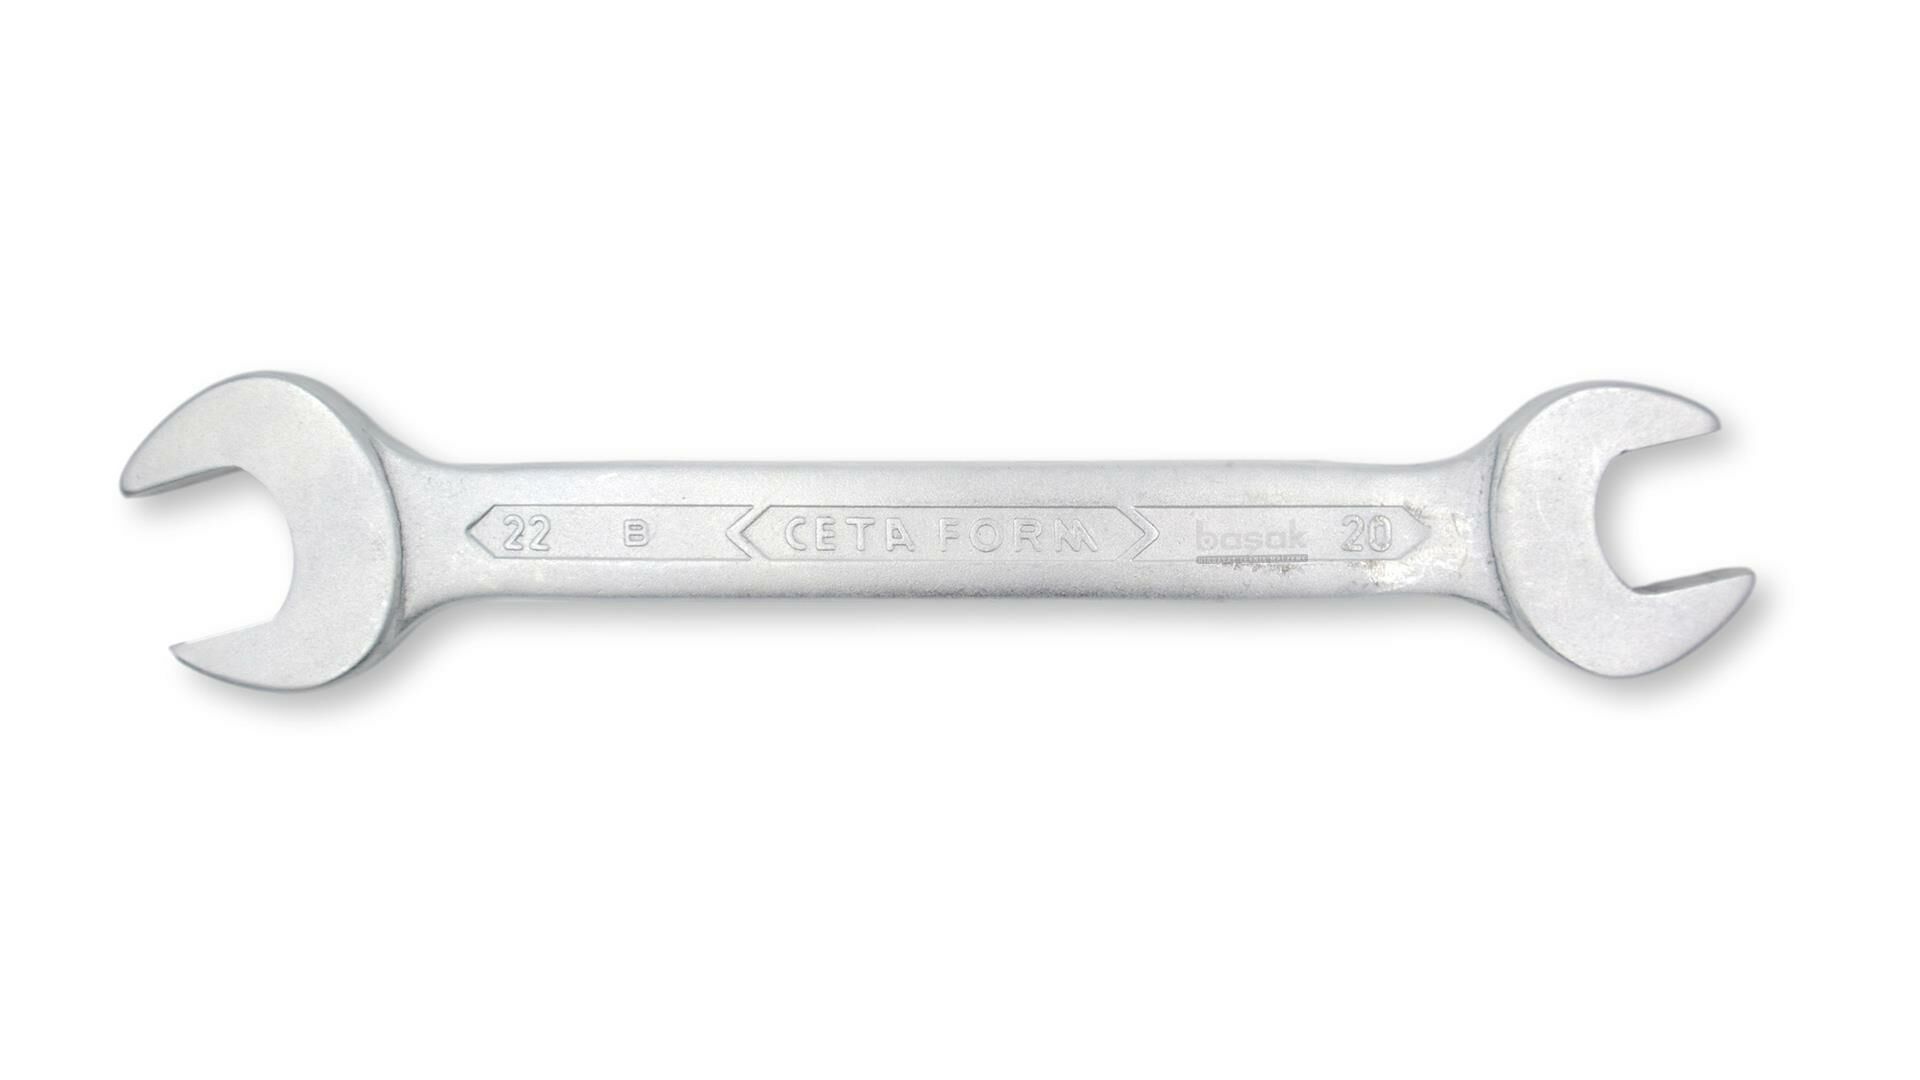 Ceta Form 20 x 22 mm Açık Ağız Anahtar B10-2022